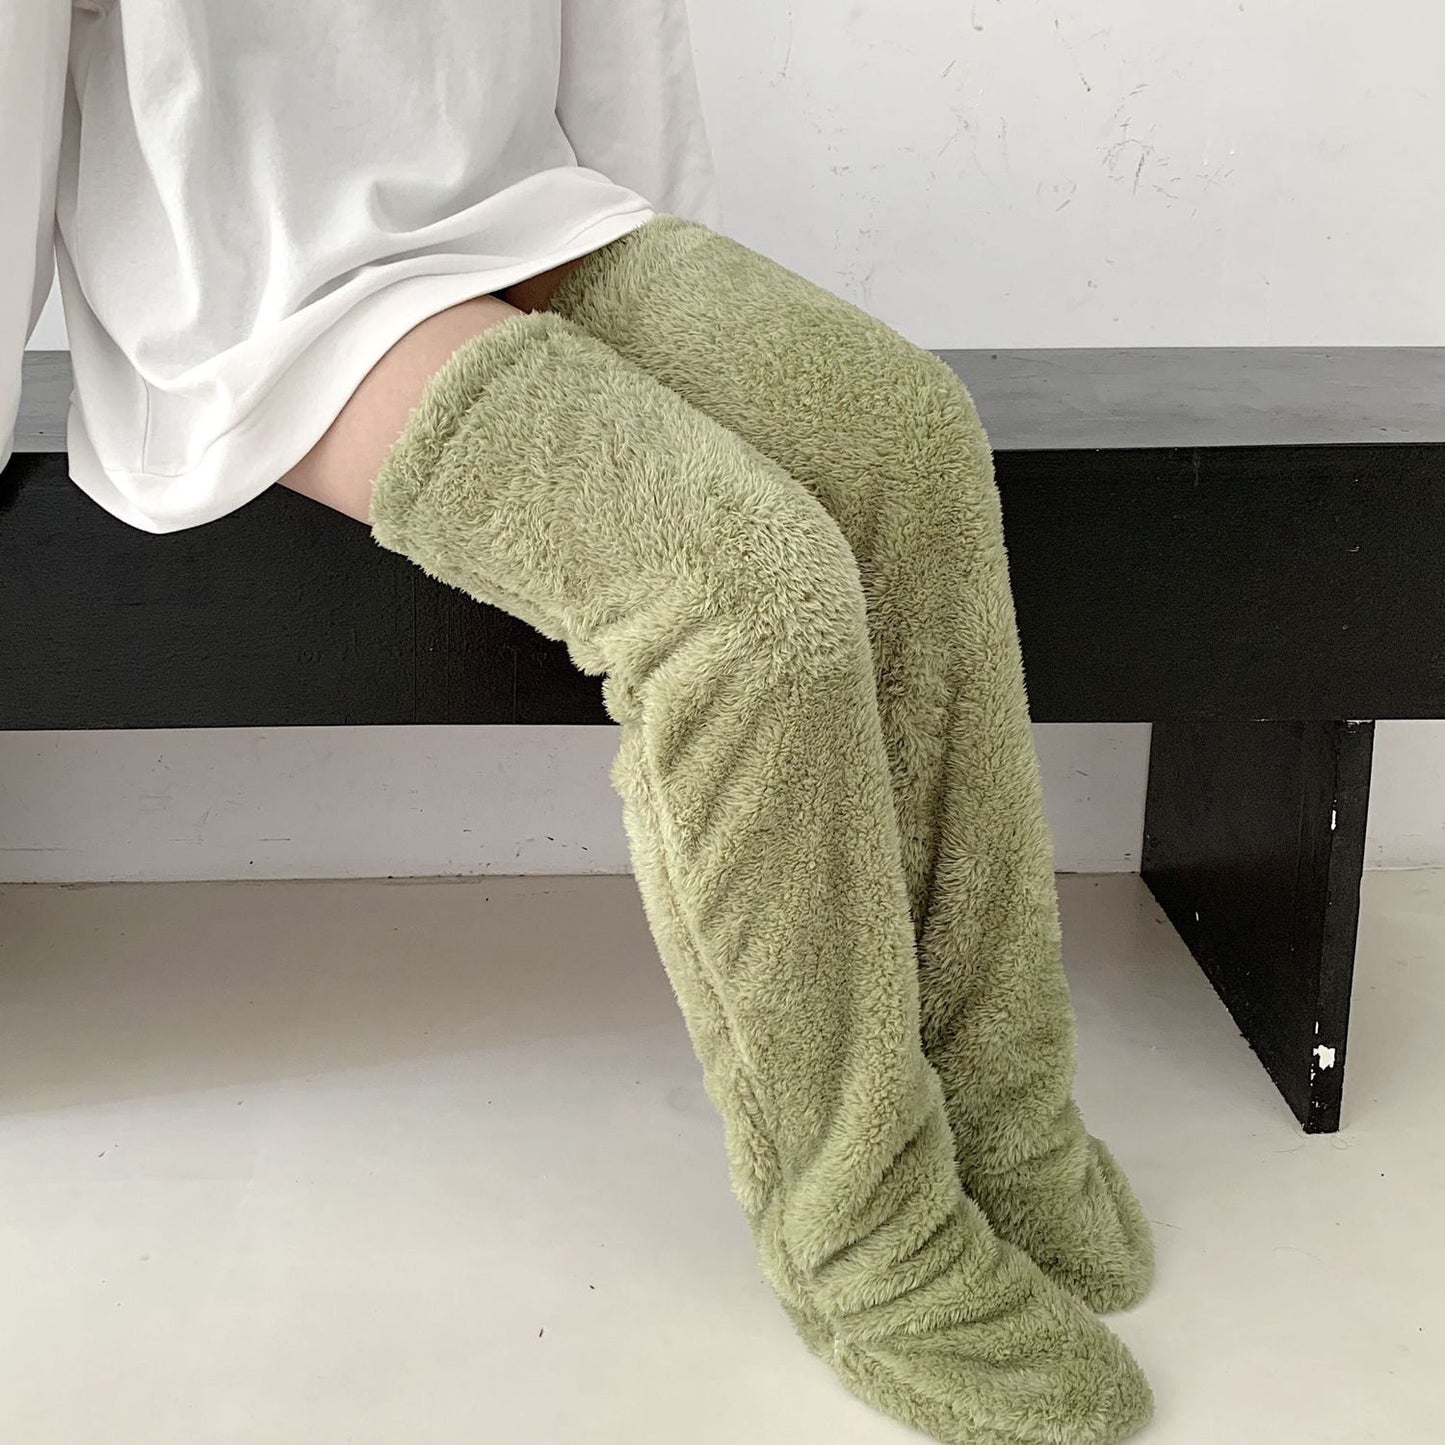 Over-Knee High Fuzzy Warm Socks